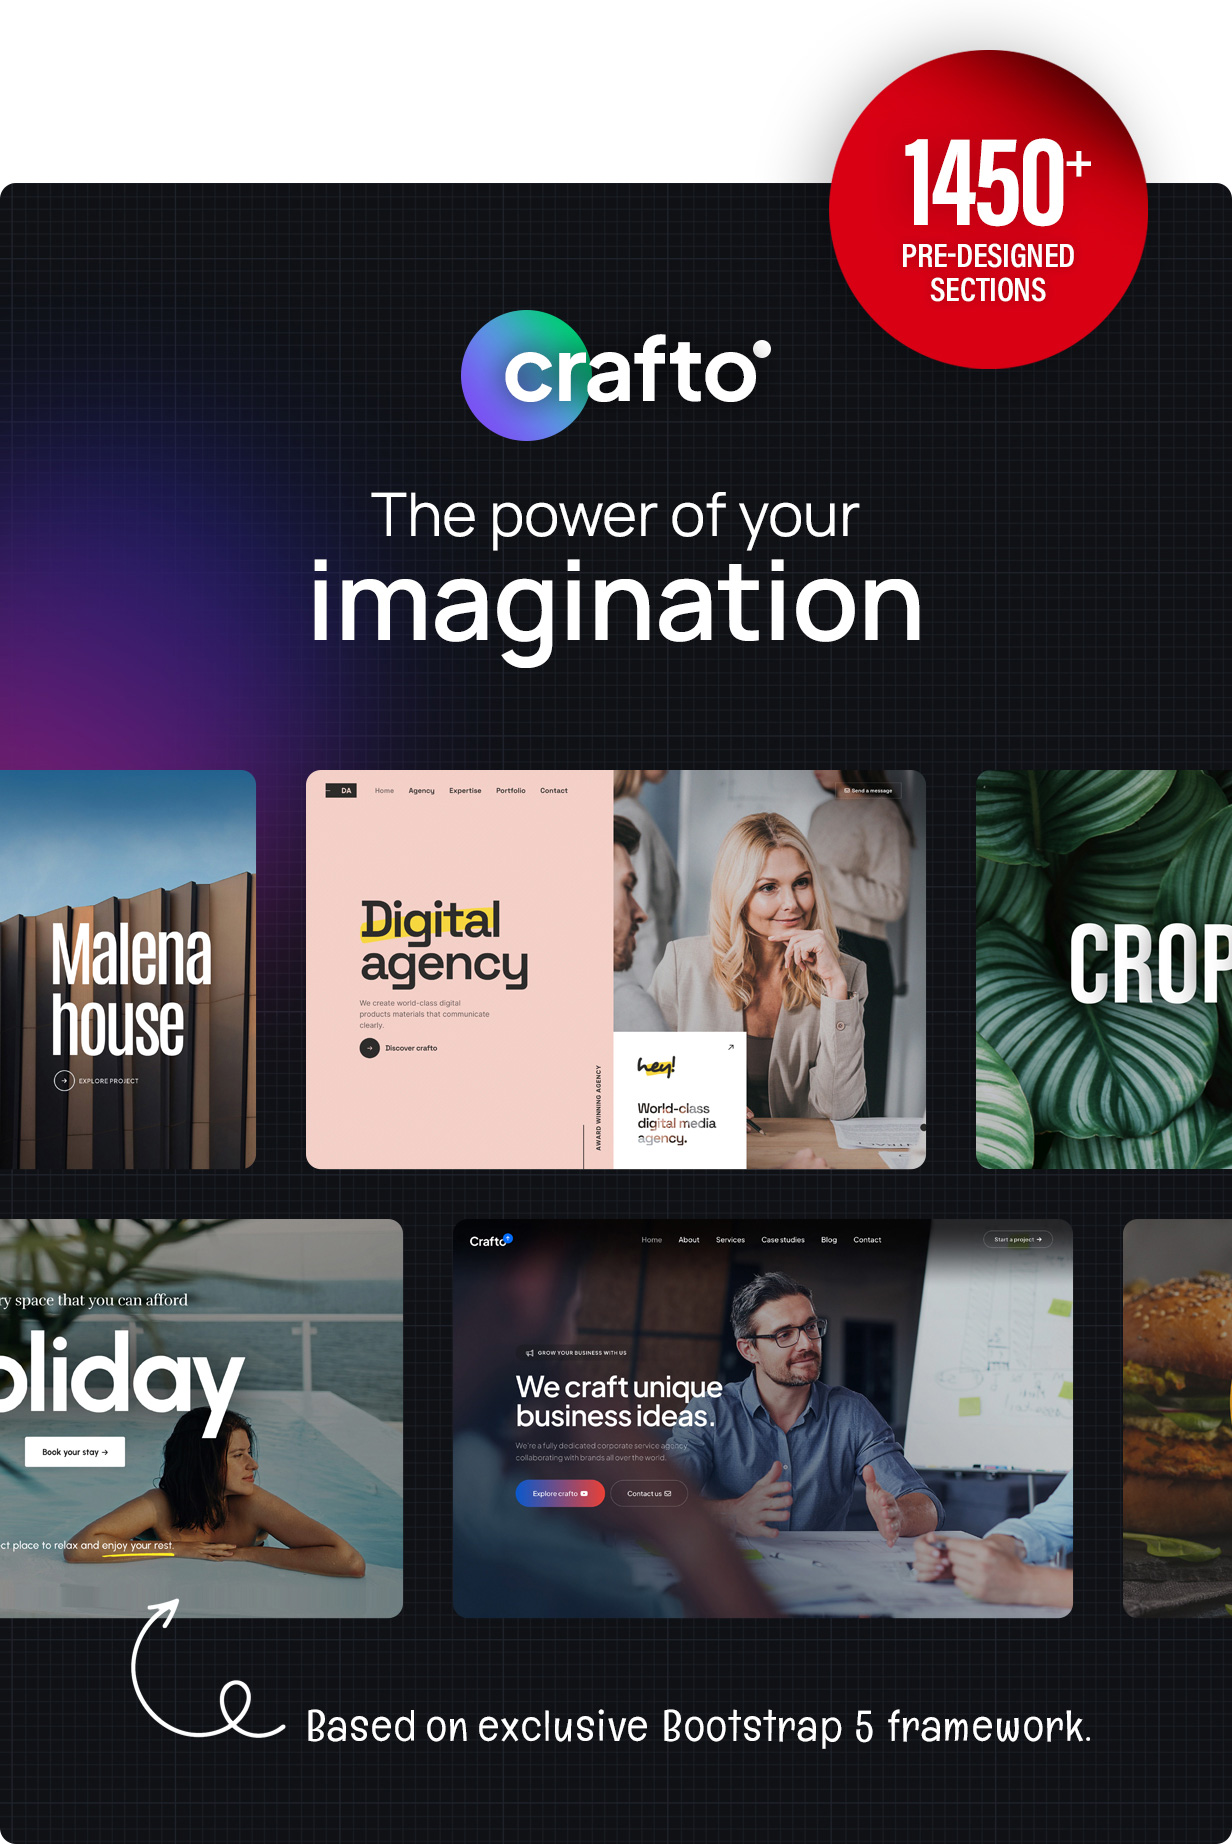 Crafto - The Multipurpose HTML5 Template